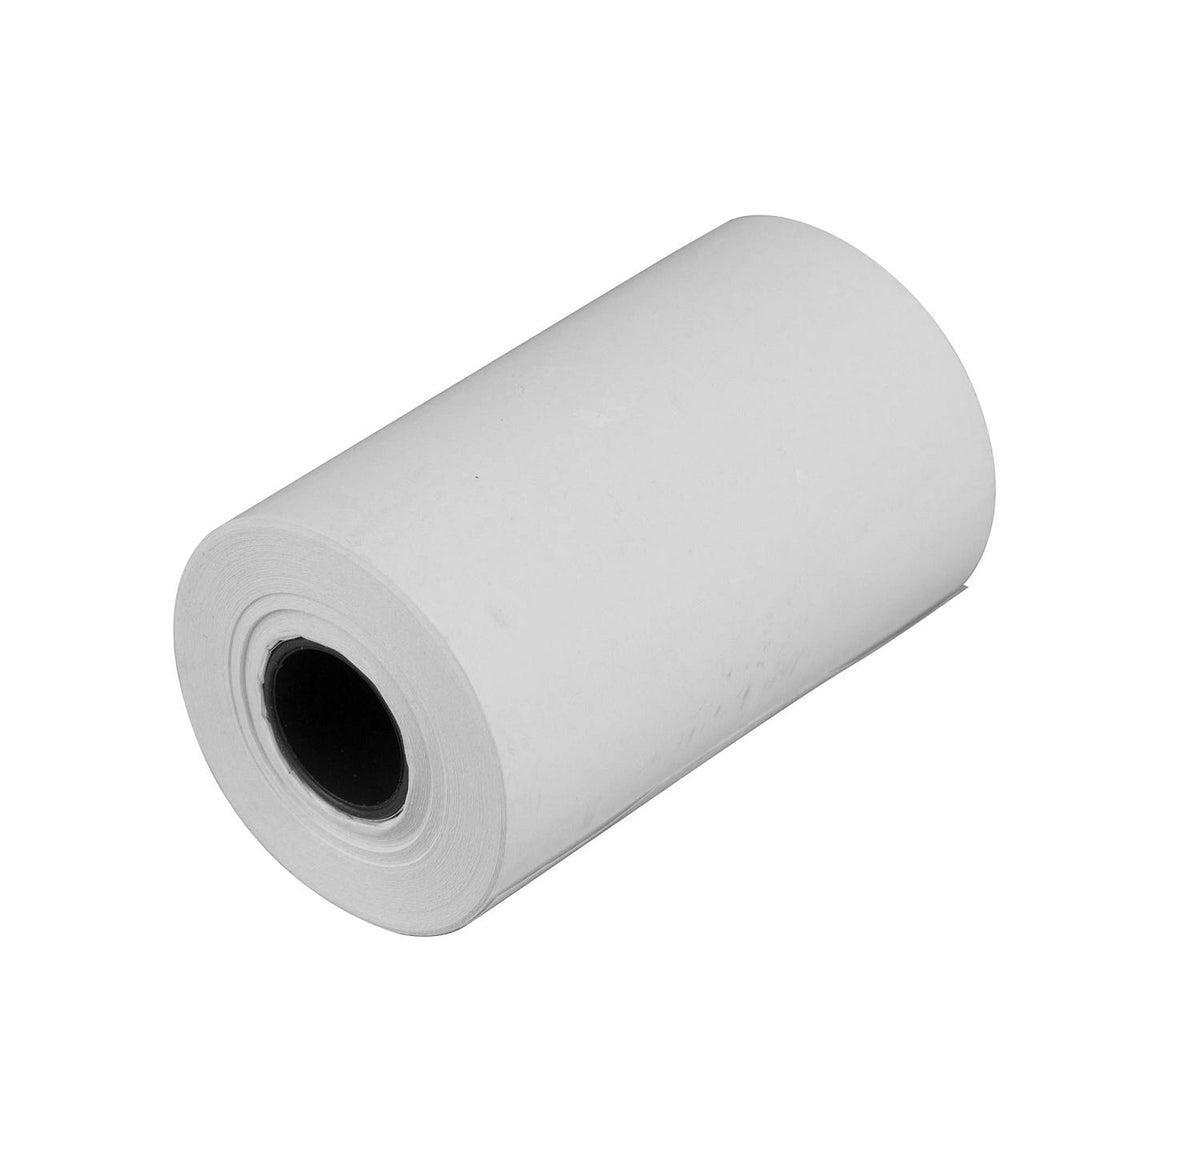 Karat 2.25 x50' Thermal Paper Rolls - White - 50 ct - Cash Register Tape